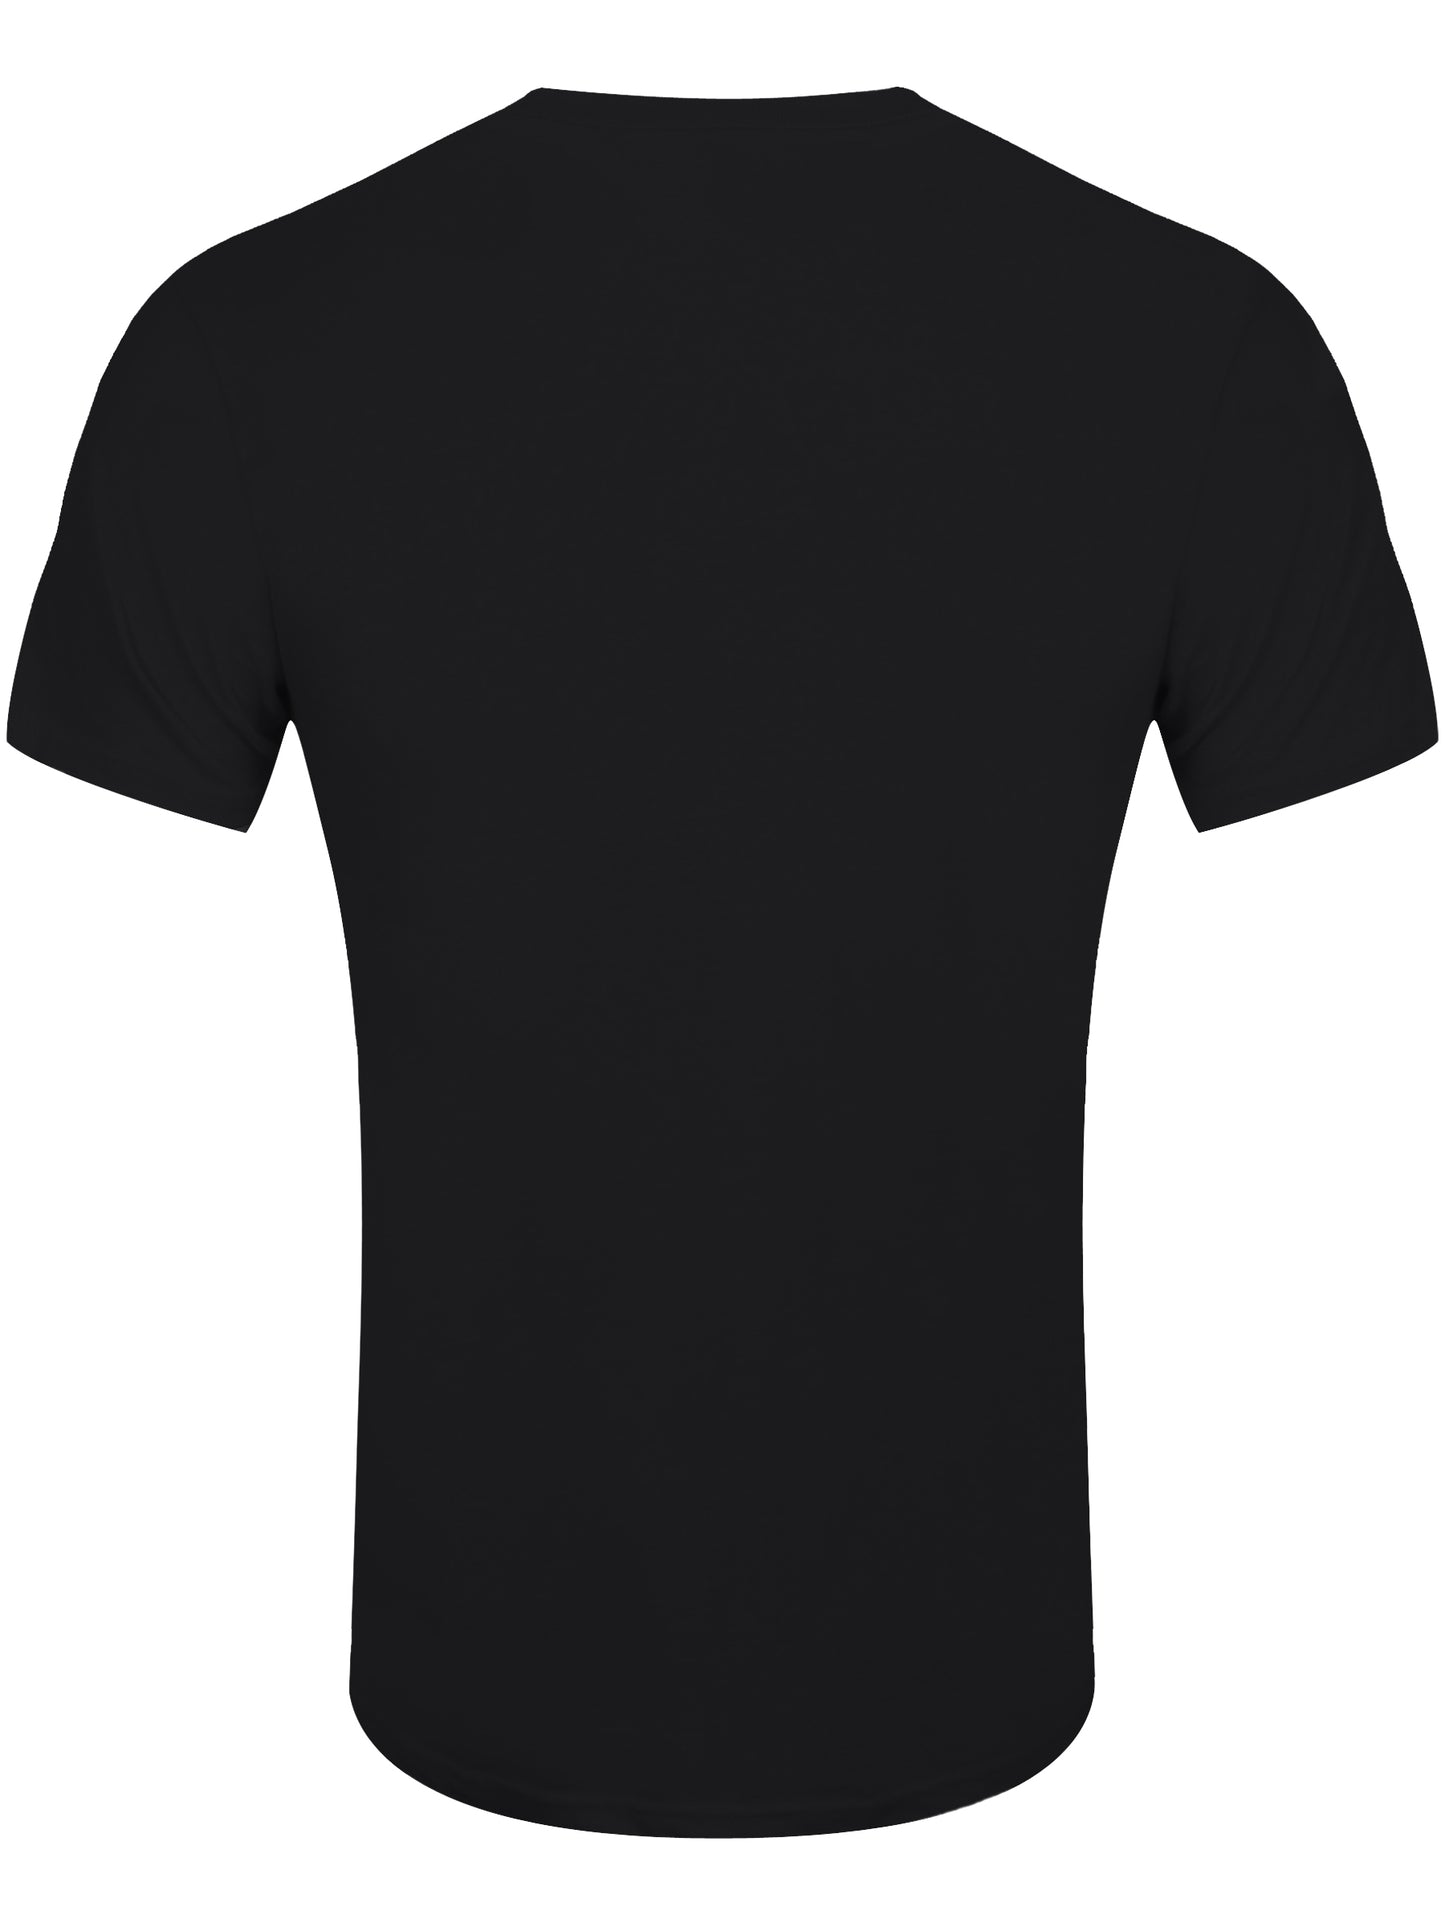 Lamb Of God Pheonix Men's Black T-Shirt